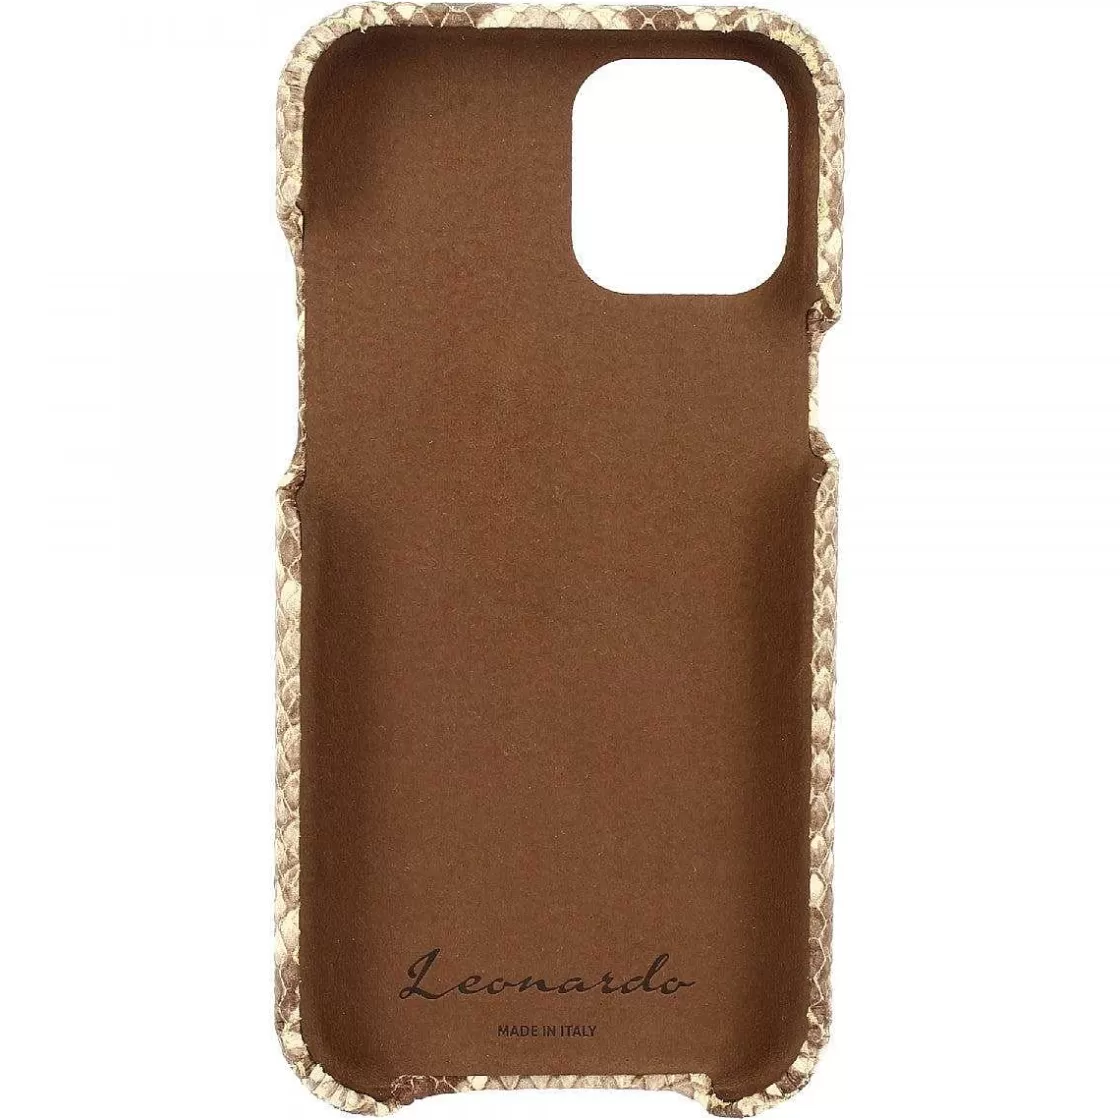 Leonardo Rock Python Printed Leather Iphone Cover Flash Sale